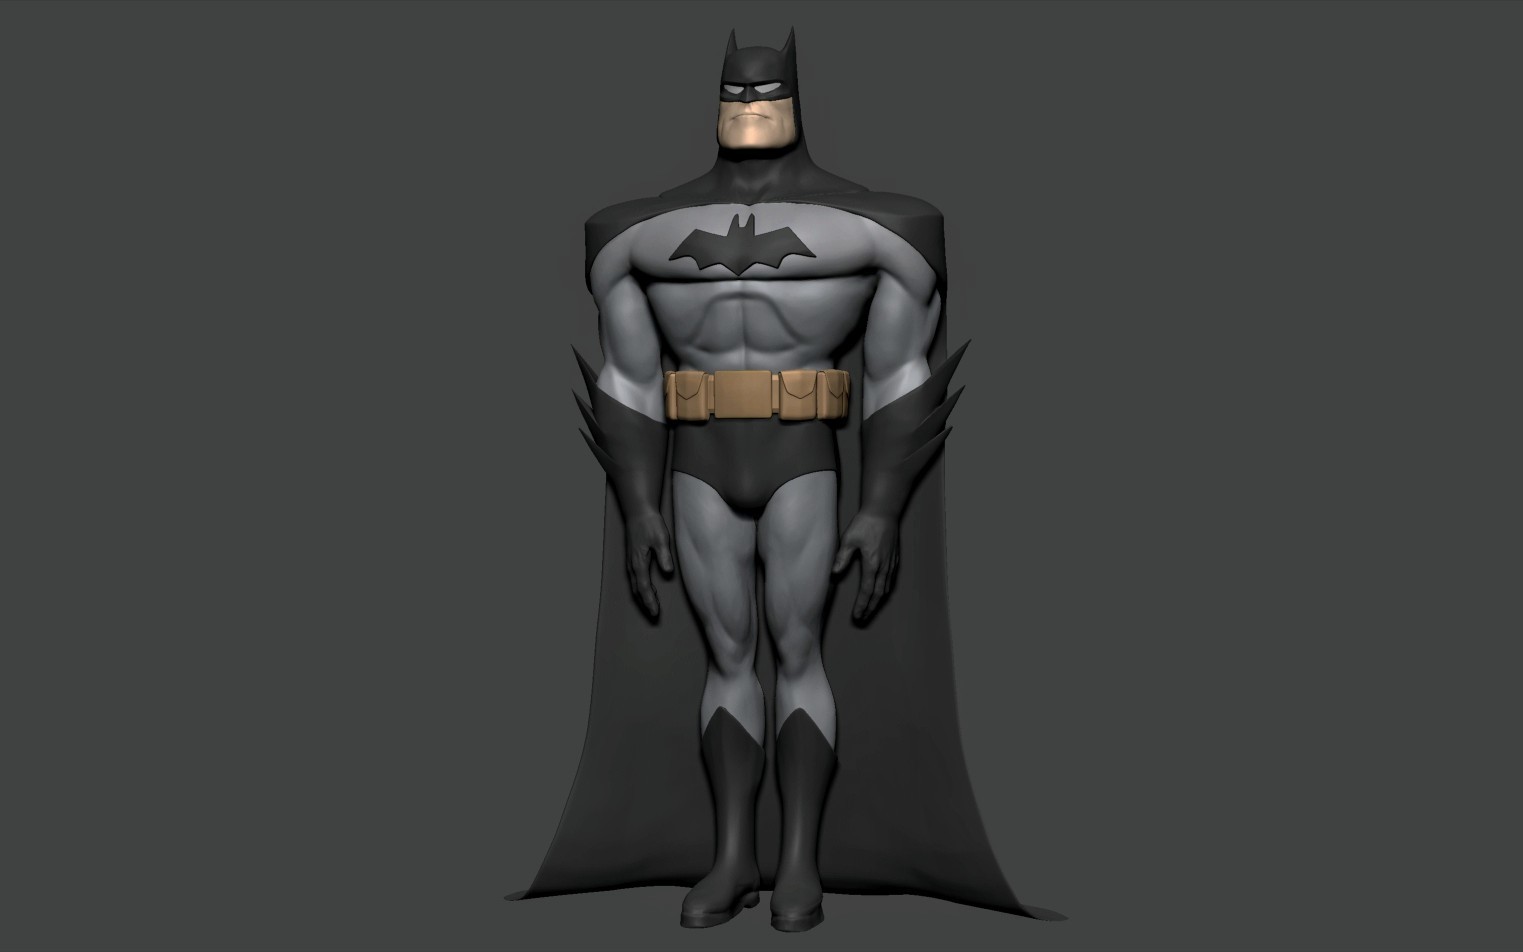 ArtStation - Batman the animated series model